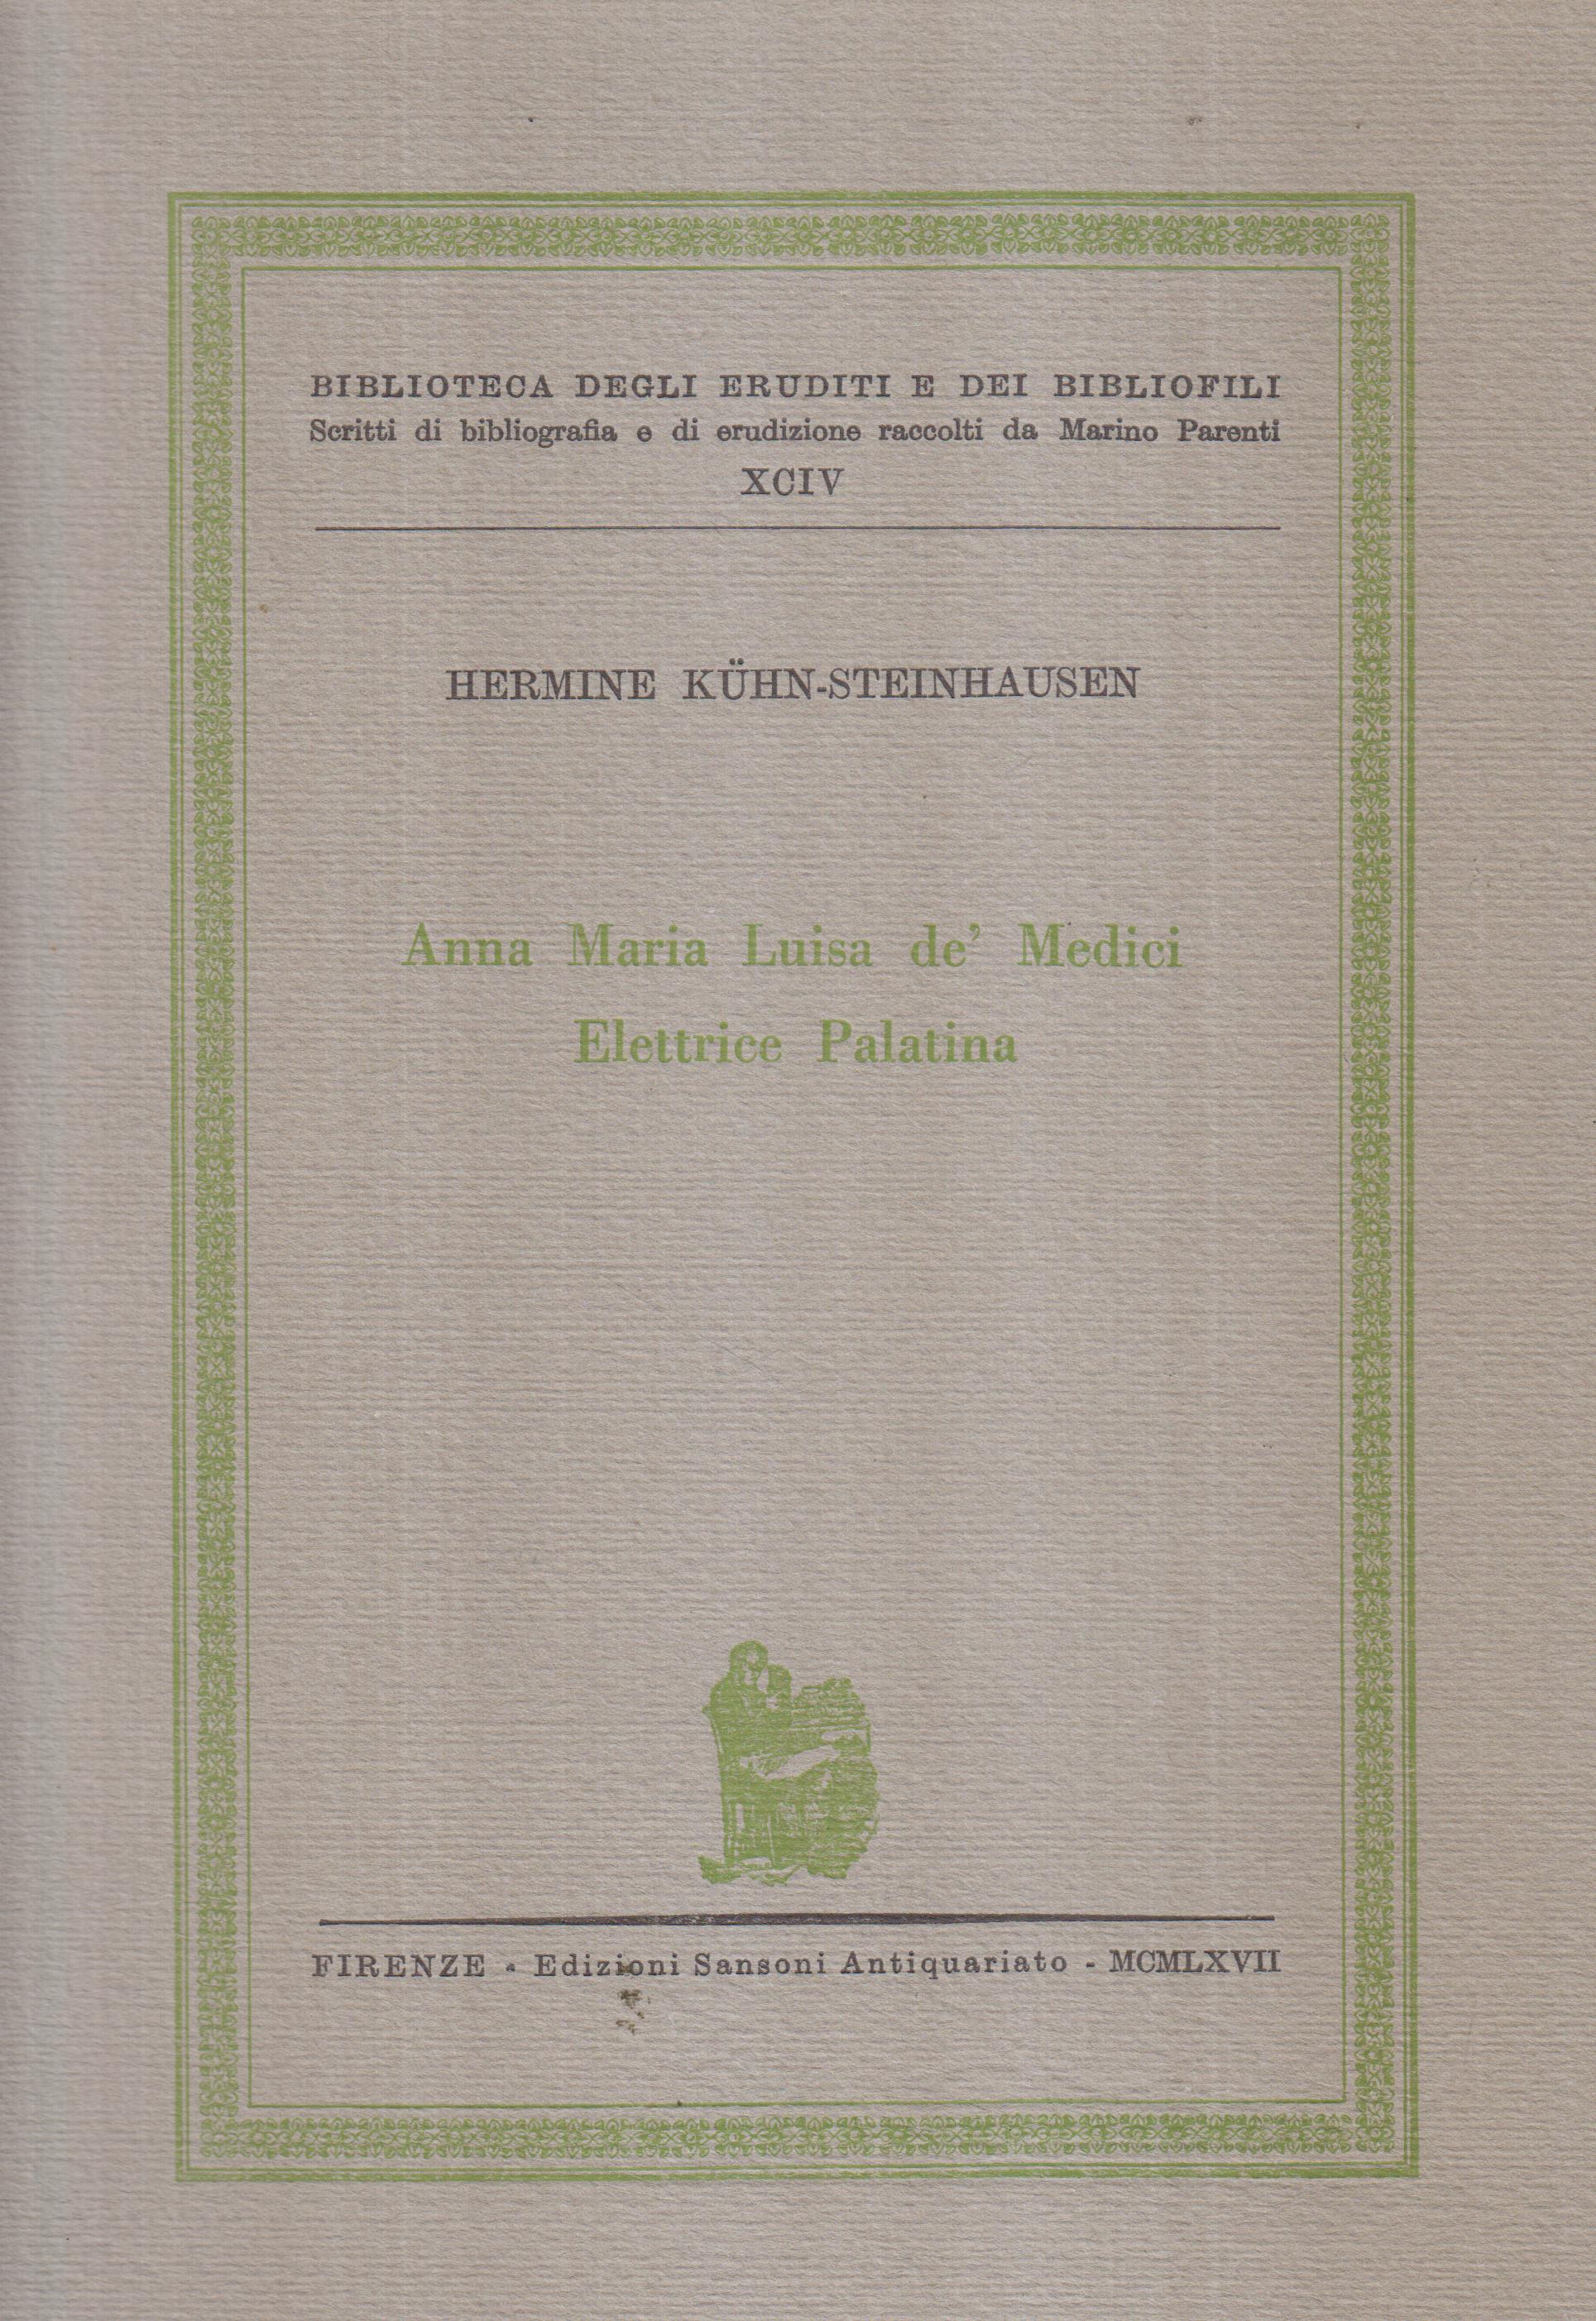 Anna Maria Luisa de' Medici Elettrice Palatina